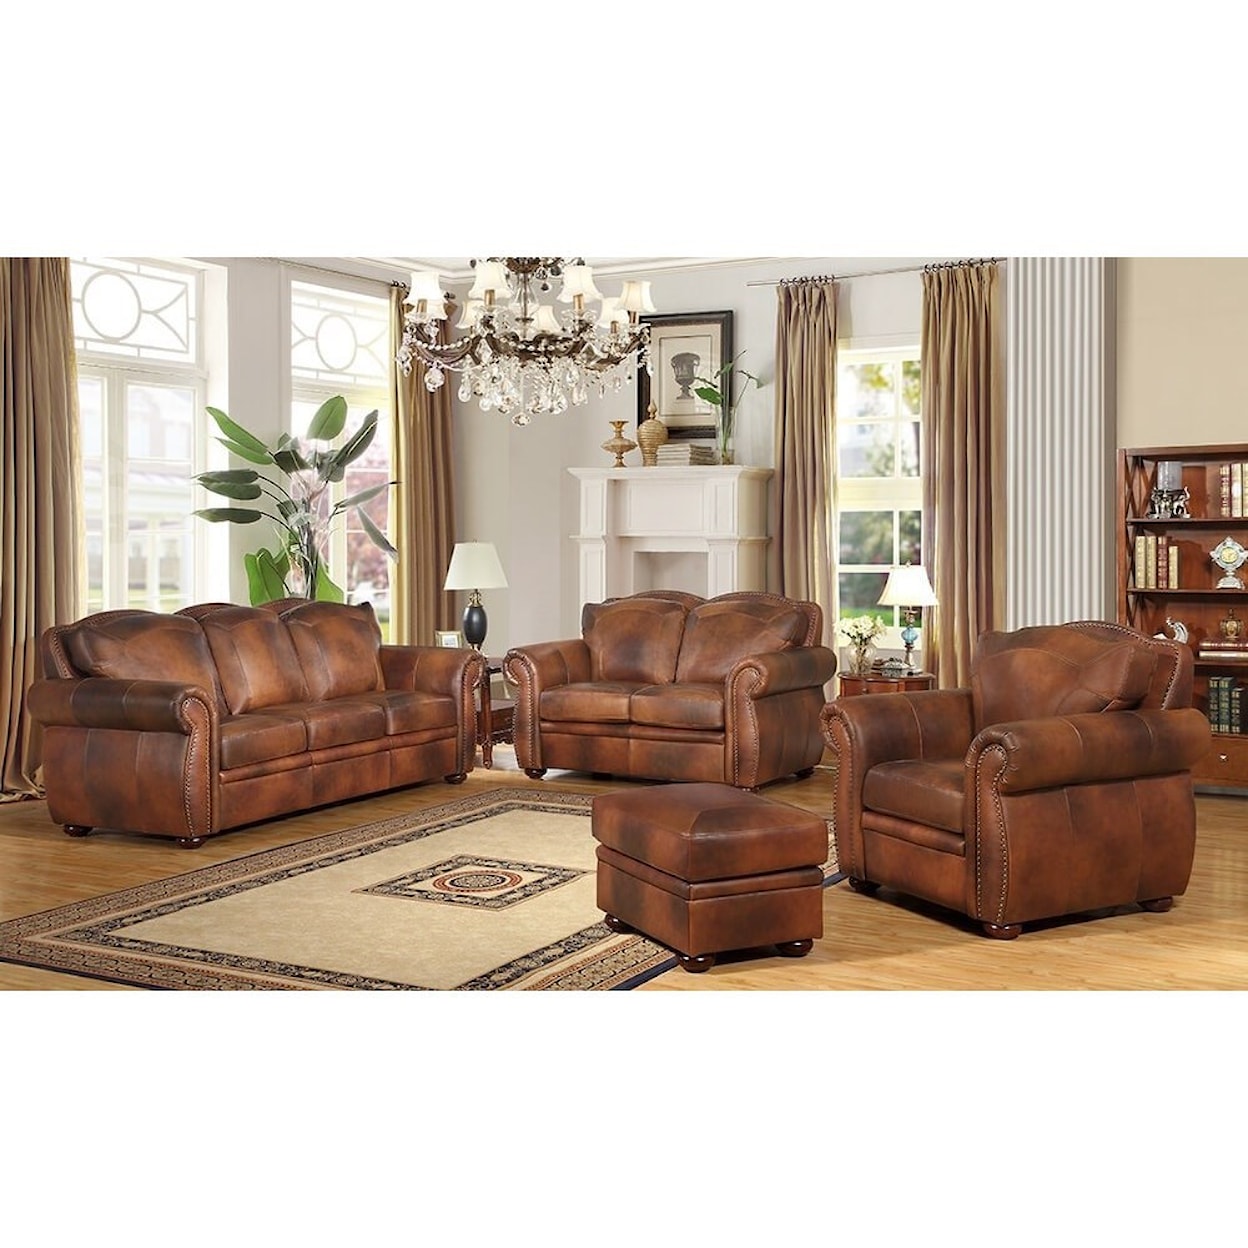 Carolina Leather Arizona Stationary Living Room Group